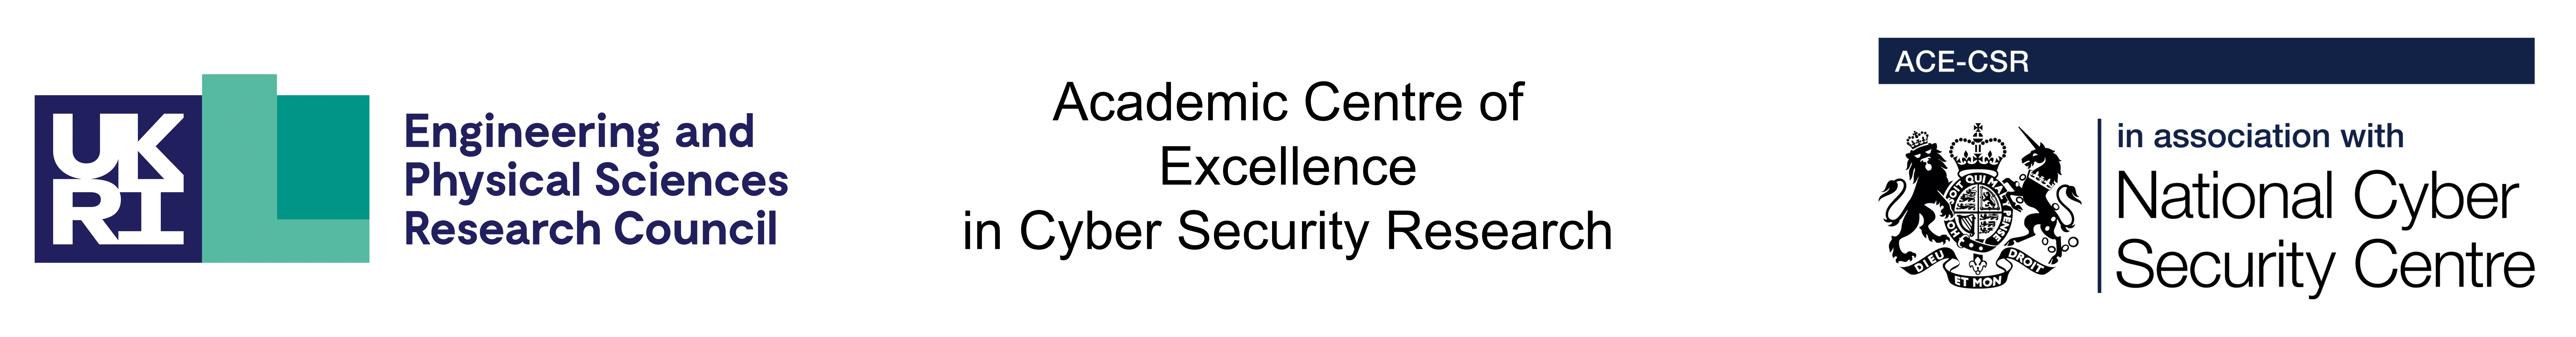 ACE-CSR dual logo